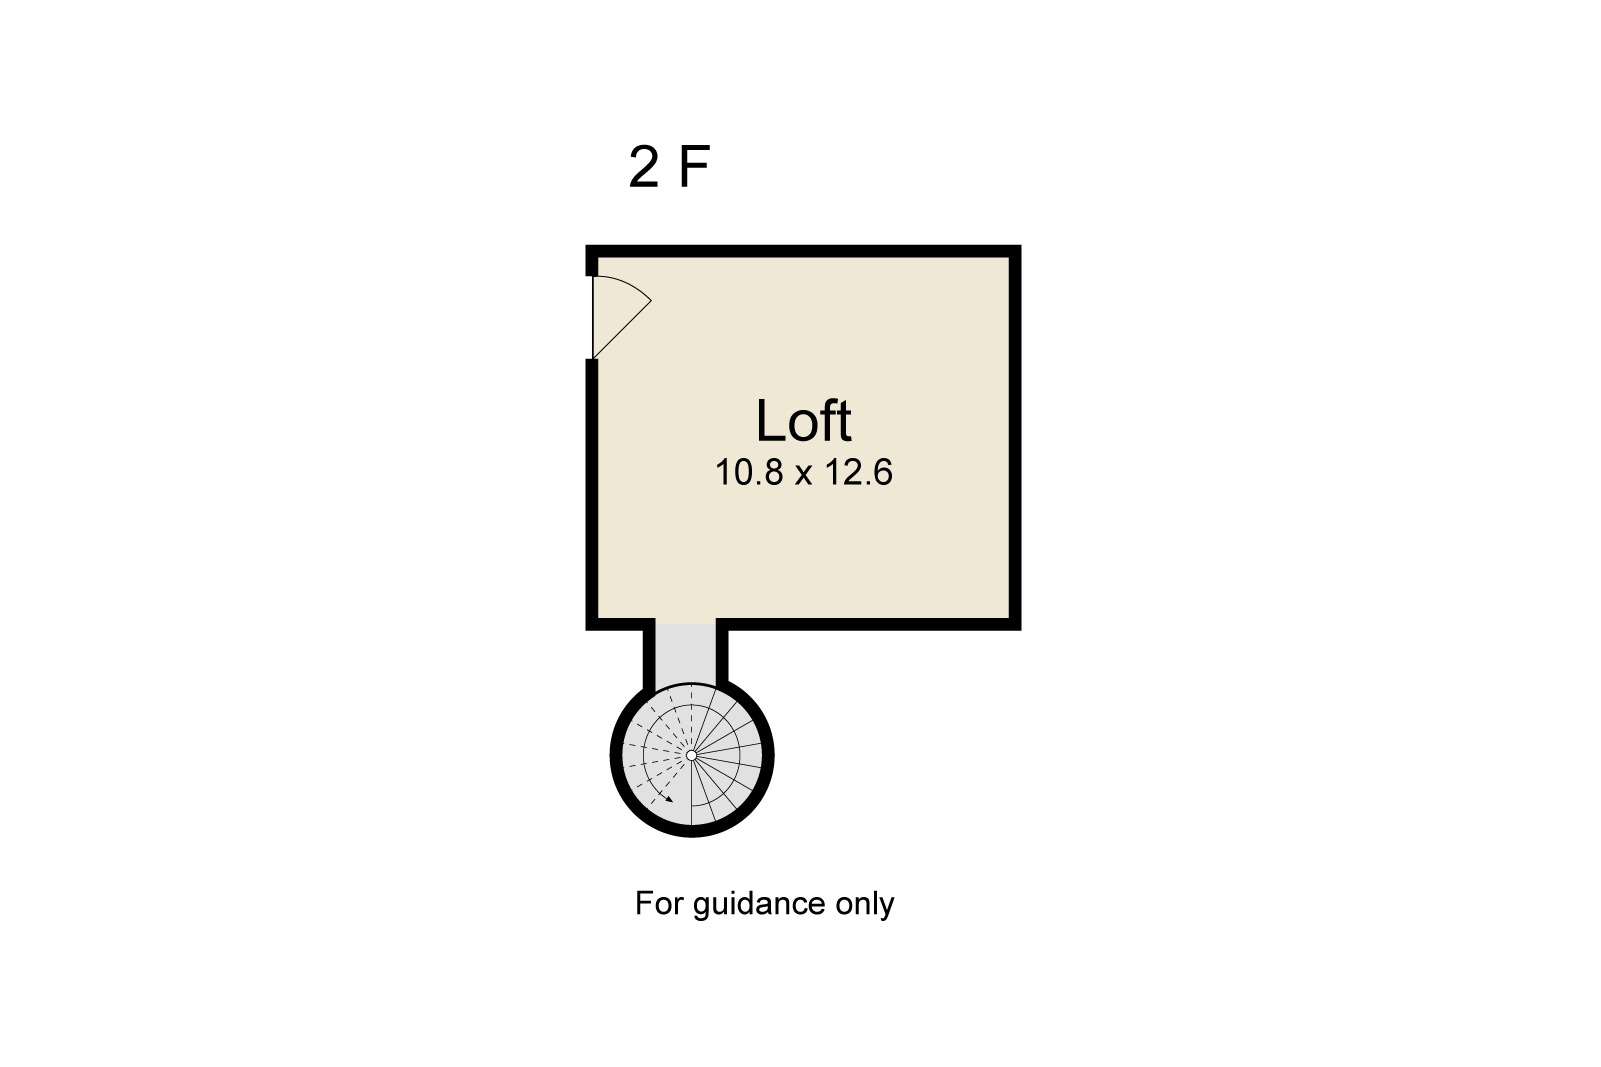 Loft image